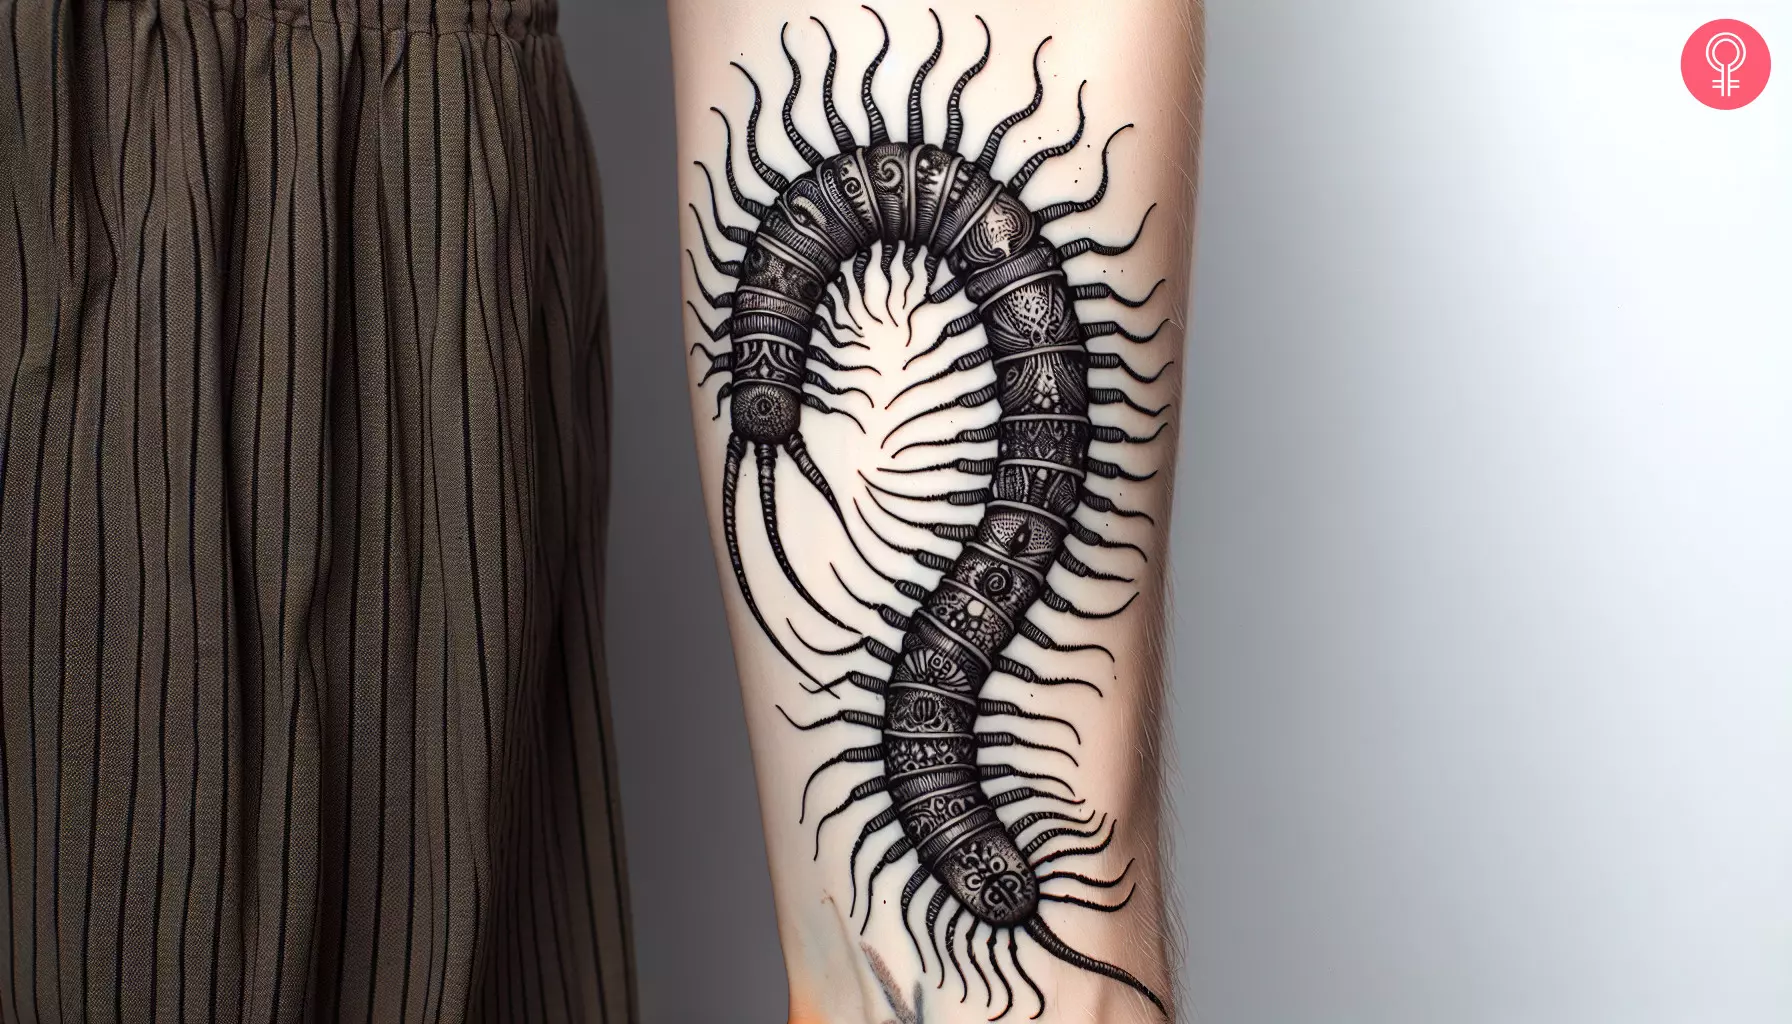 entipede tattoo on the forearm